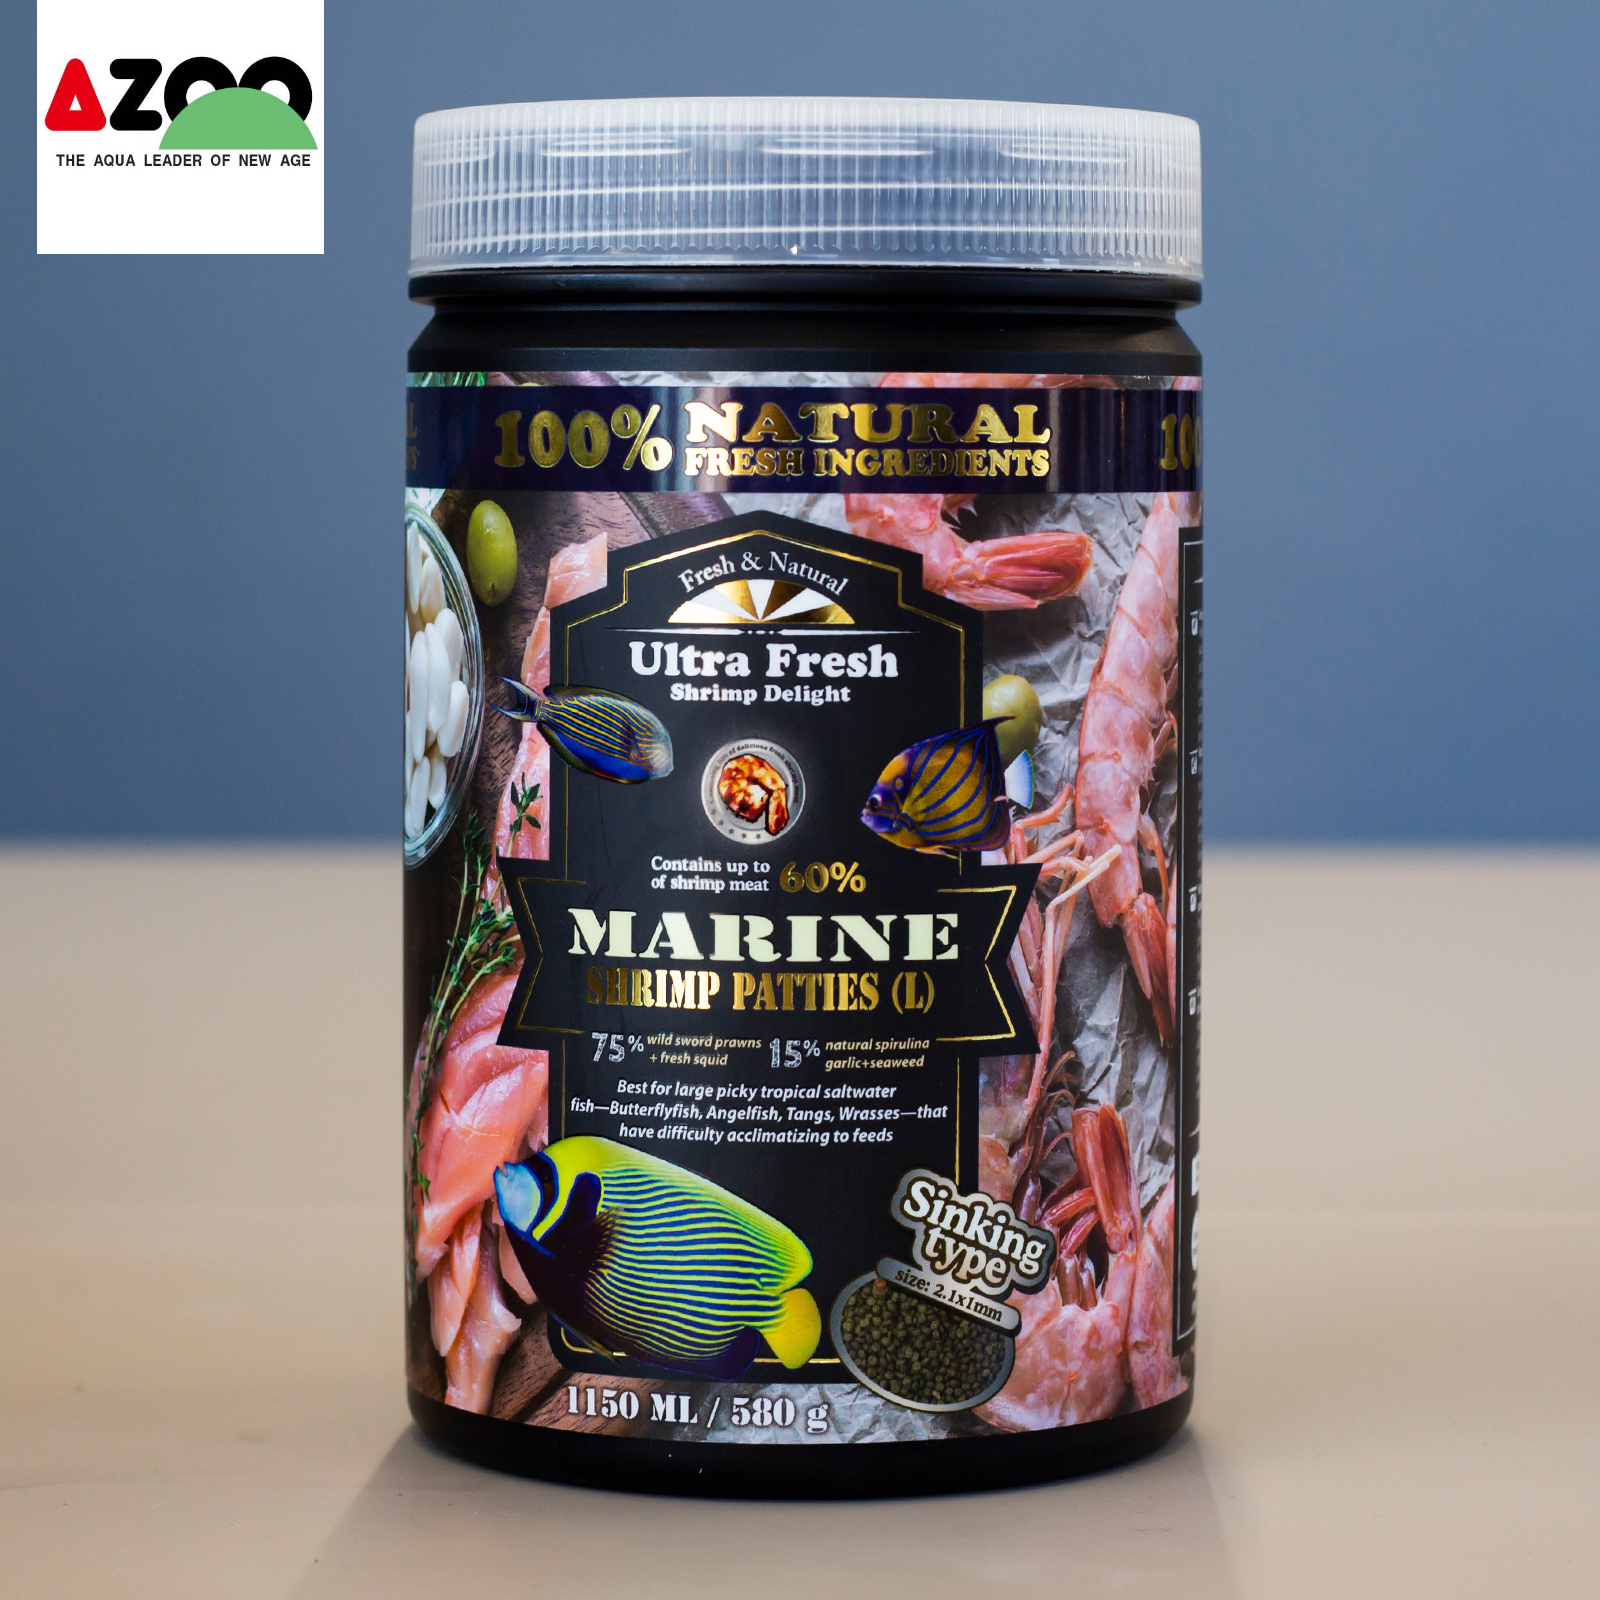 AZOO Marine Shrimp Patties(L)1150ml/580g